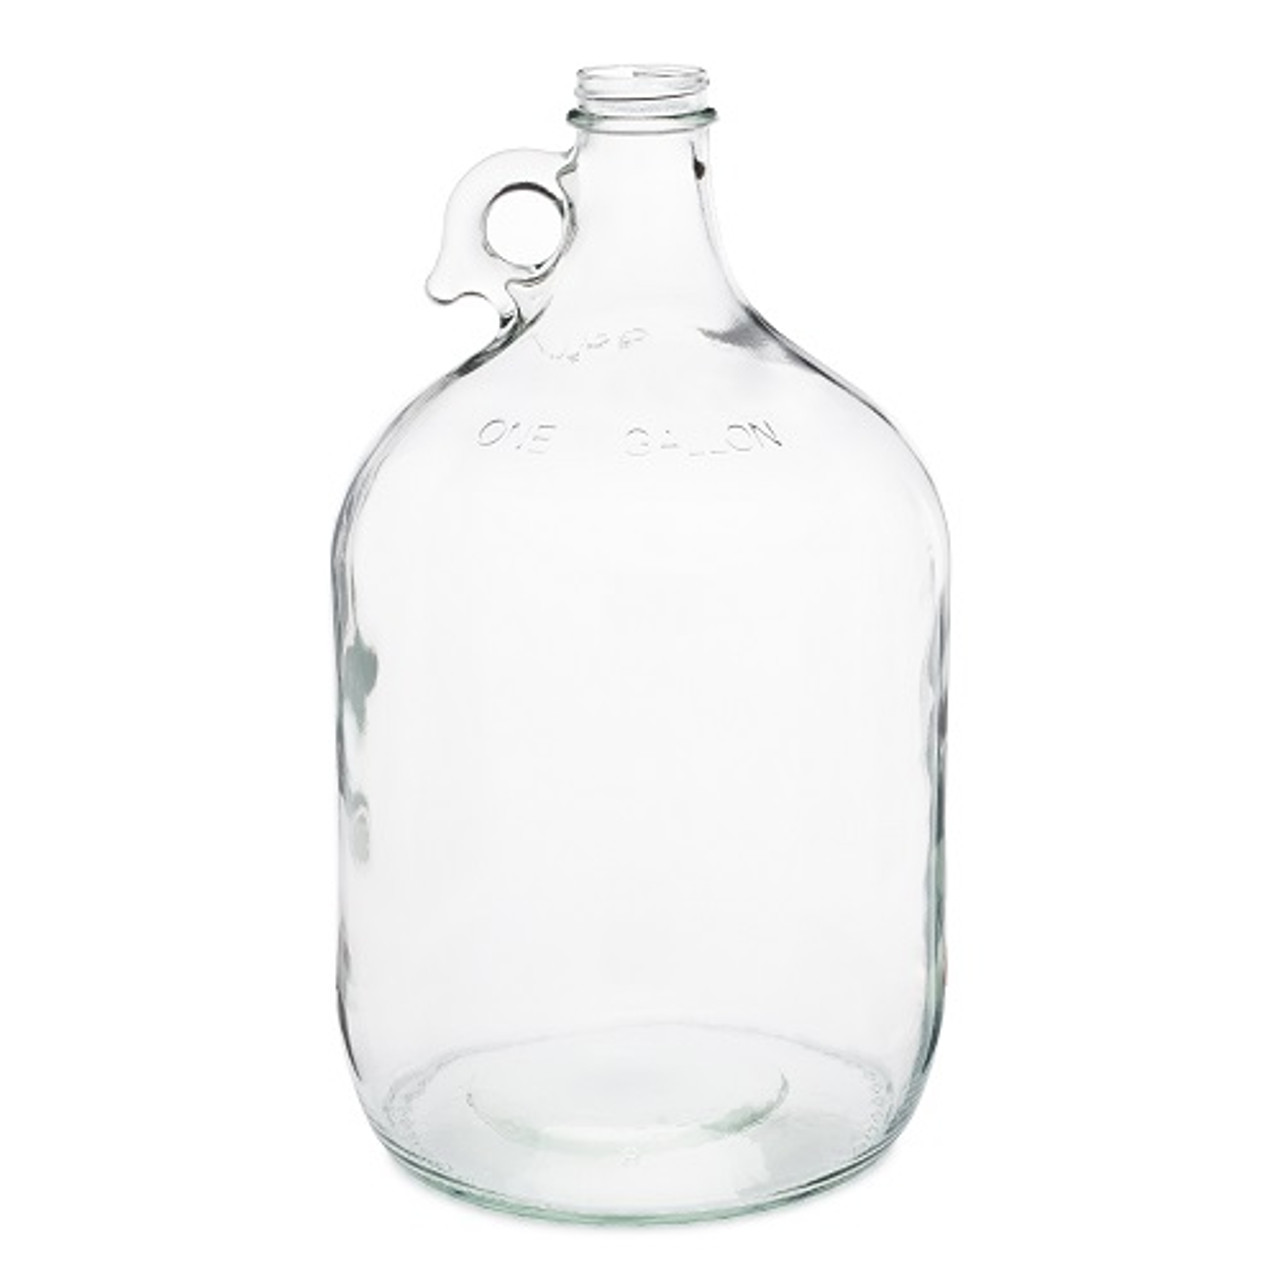 1 Gallon Wholesale Glass Jars  128oz Bulk Economy Round Glass Jar